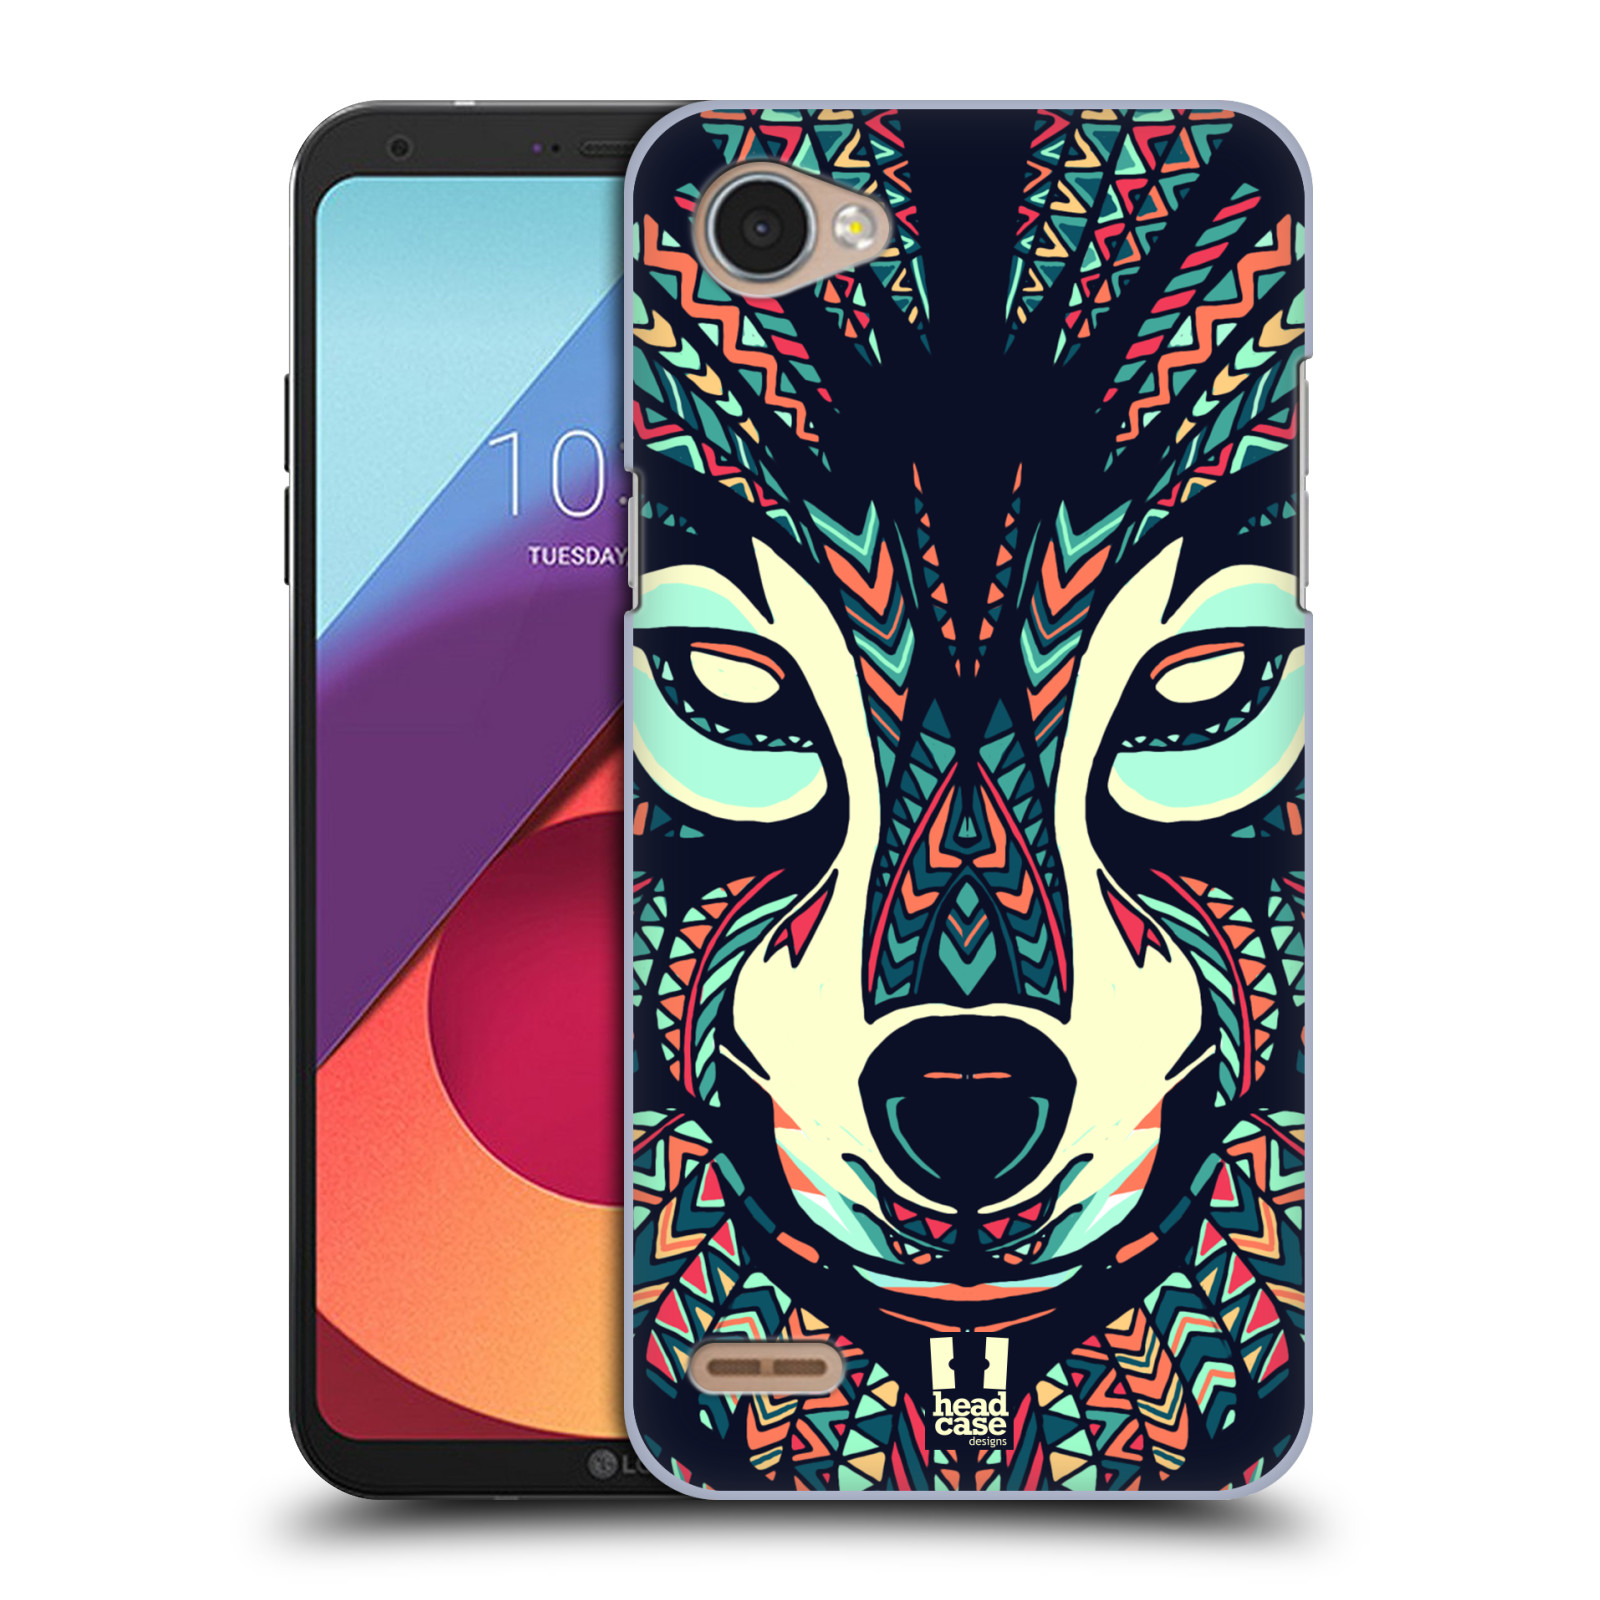 HEAD CASE plastový obal na mobil LG Q6 / Q6 PLUS vzor Aztécký motiv zvíře 3 vlk